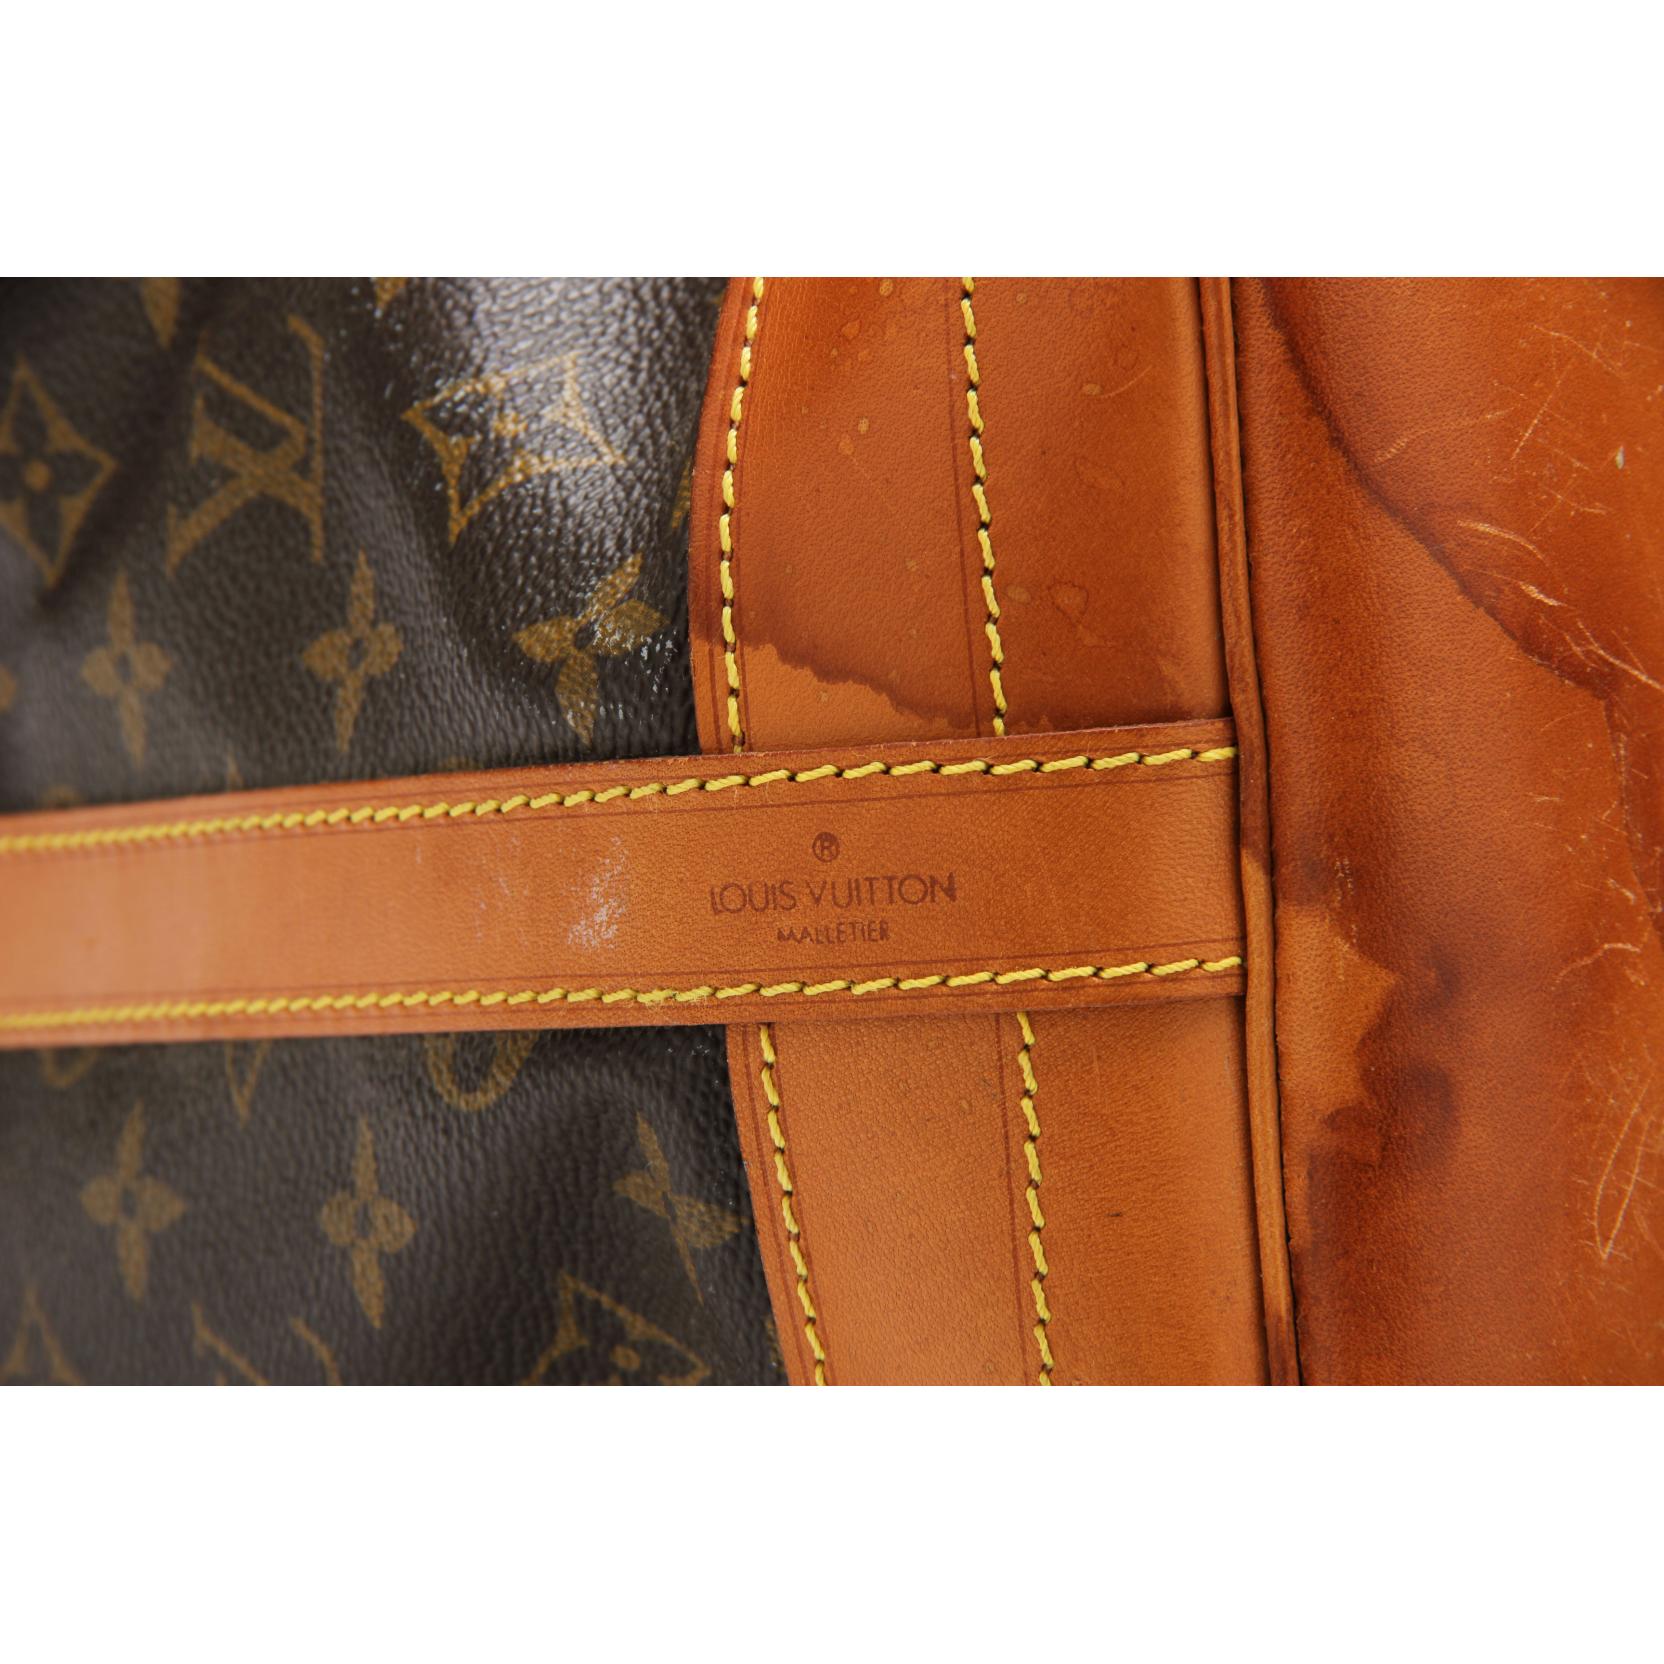 Vintage Drawstring Hobo Bag, Louis Vuitton (Lot 705 - The Fall Catalogue  AuctionSep 11, 2014, 6:00pm)